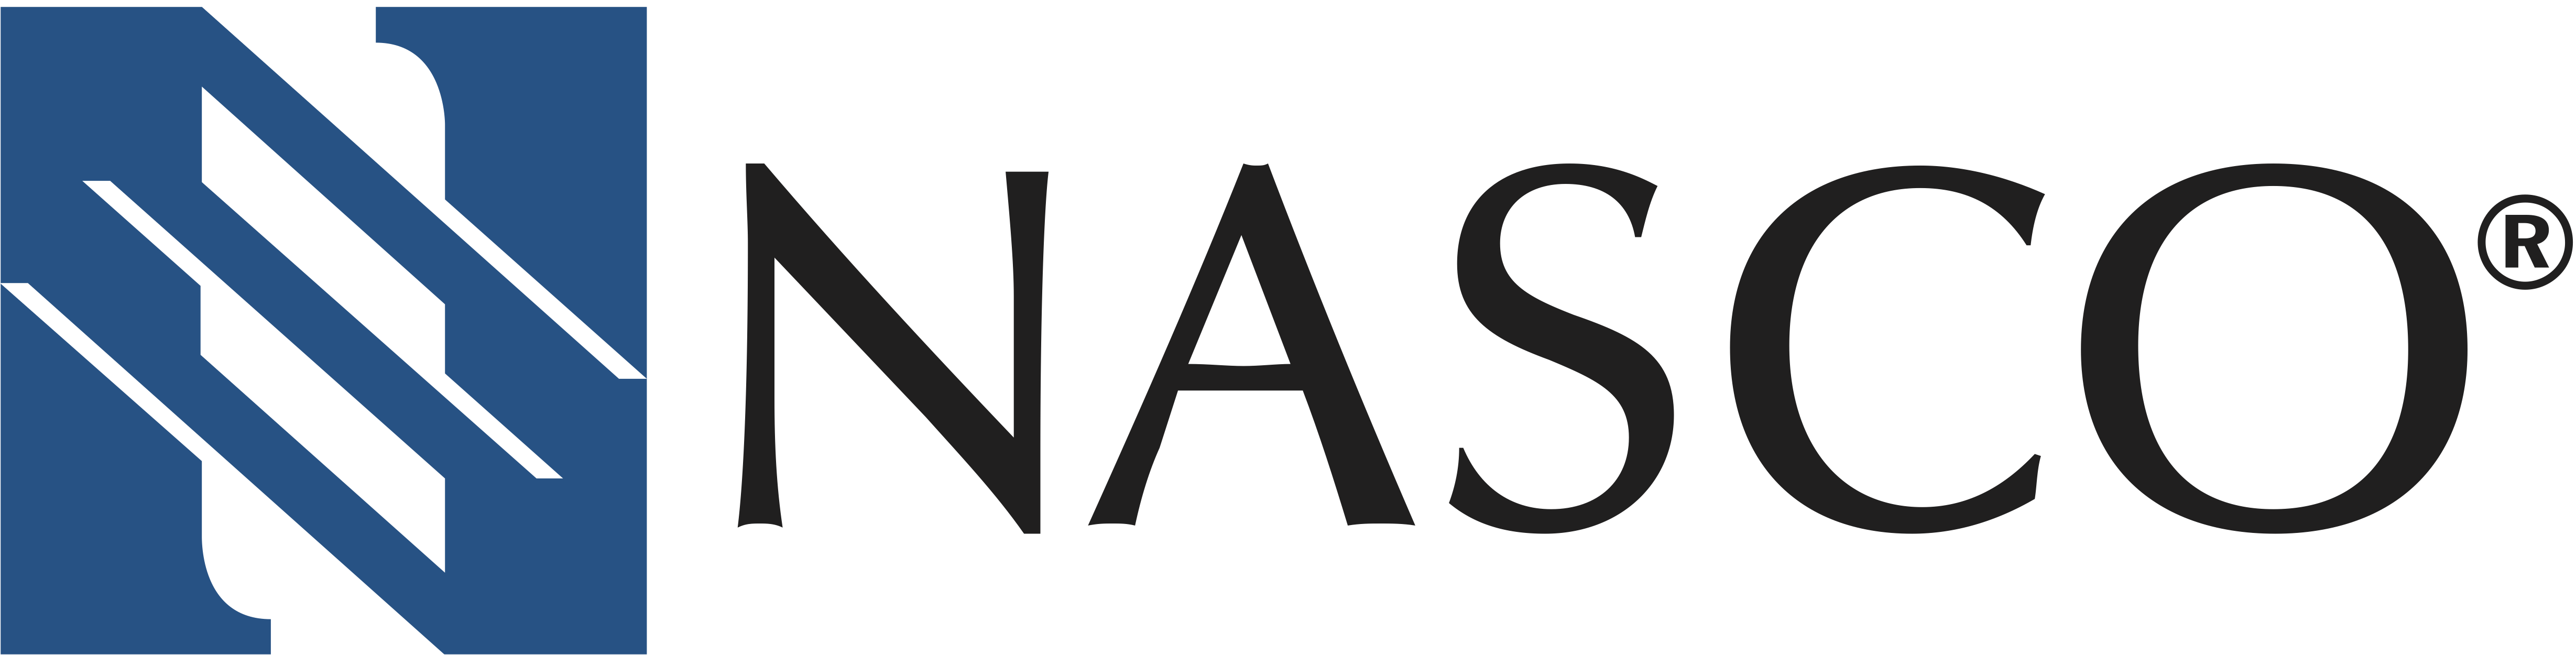 Nasco Logo - nasco logo - Advanced Technology Development Center